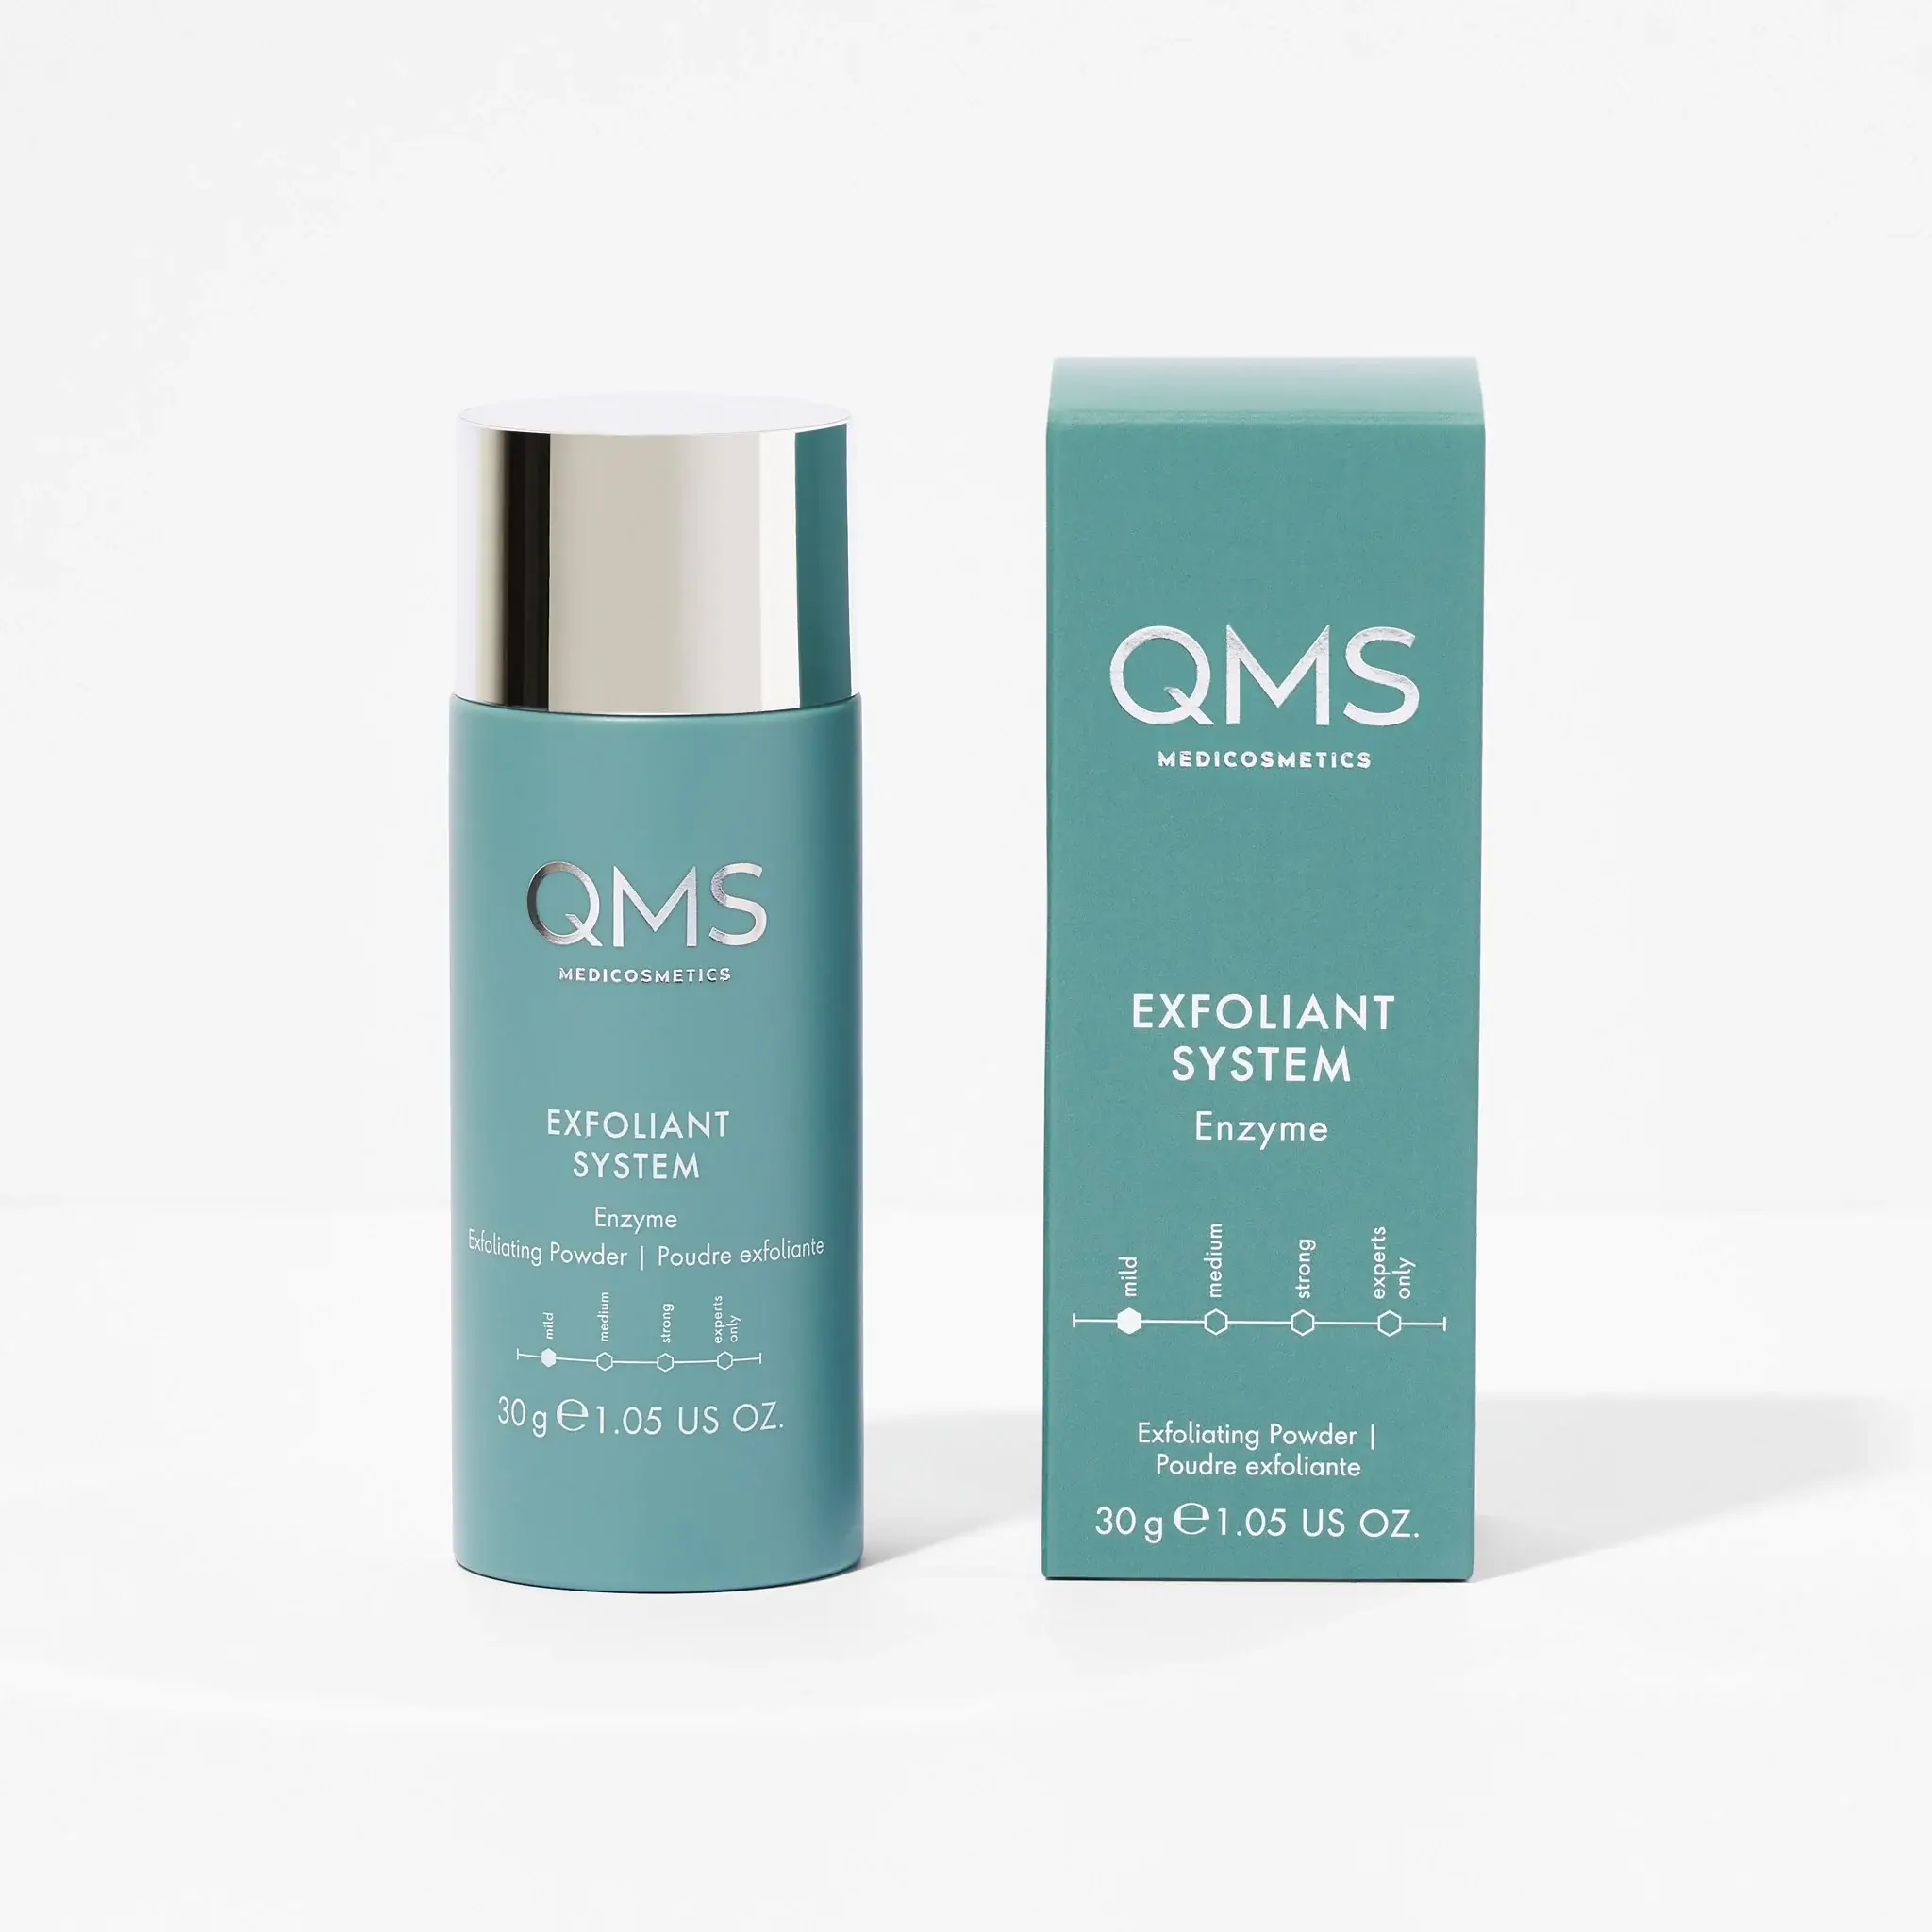 QMS Medicosmetics Exfoliant Enzyme Powder 30g